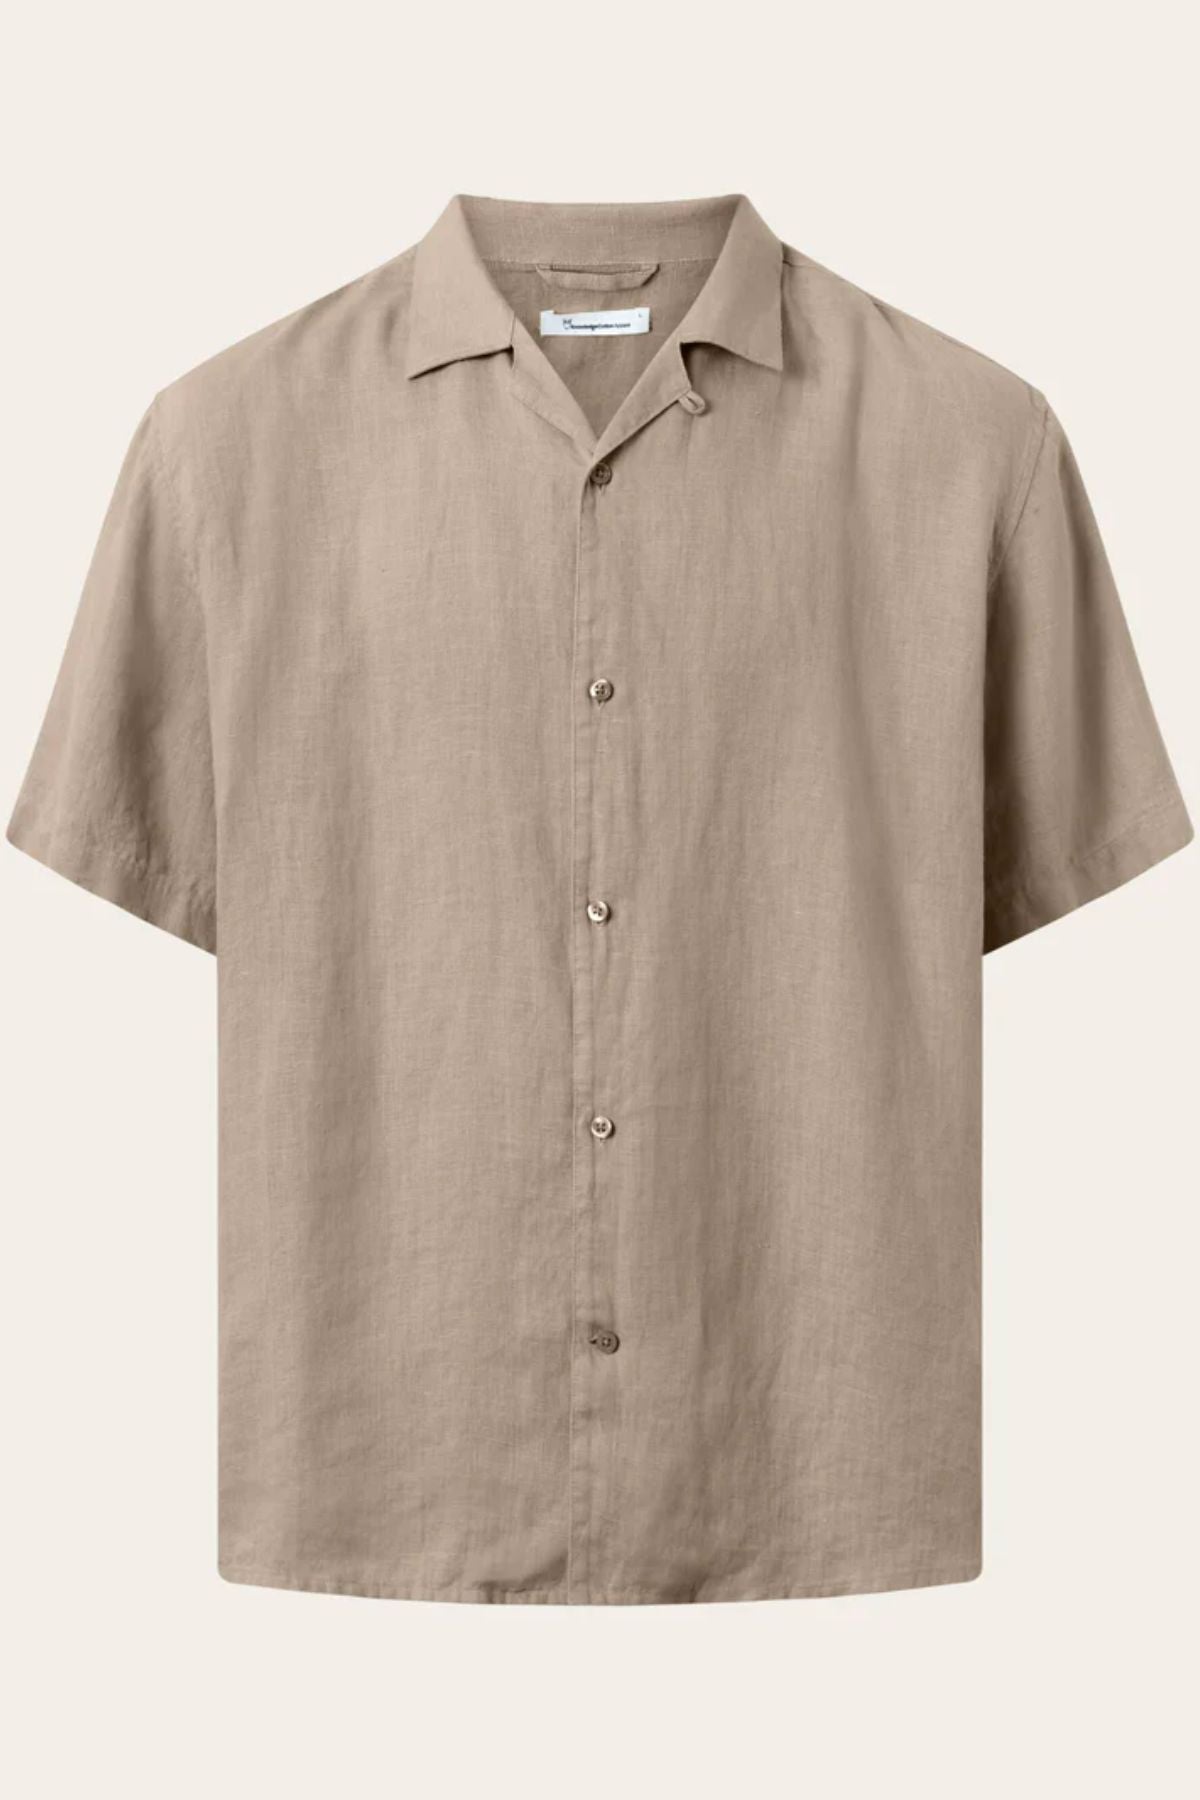 Chemise box short sleeve linen - Knowledge cotton apparel